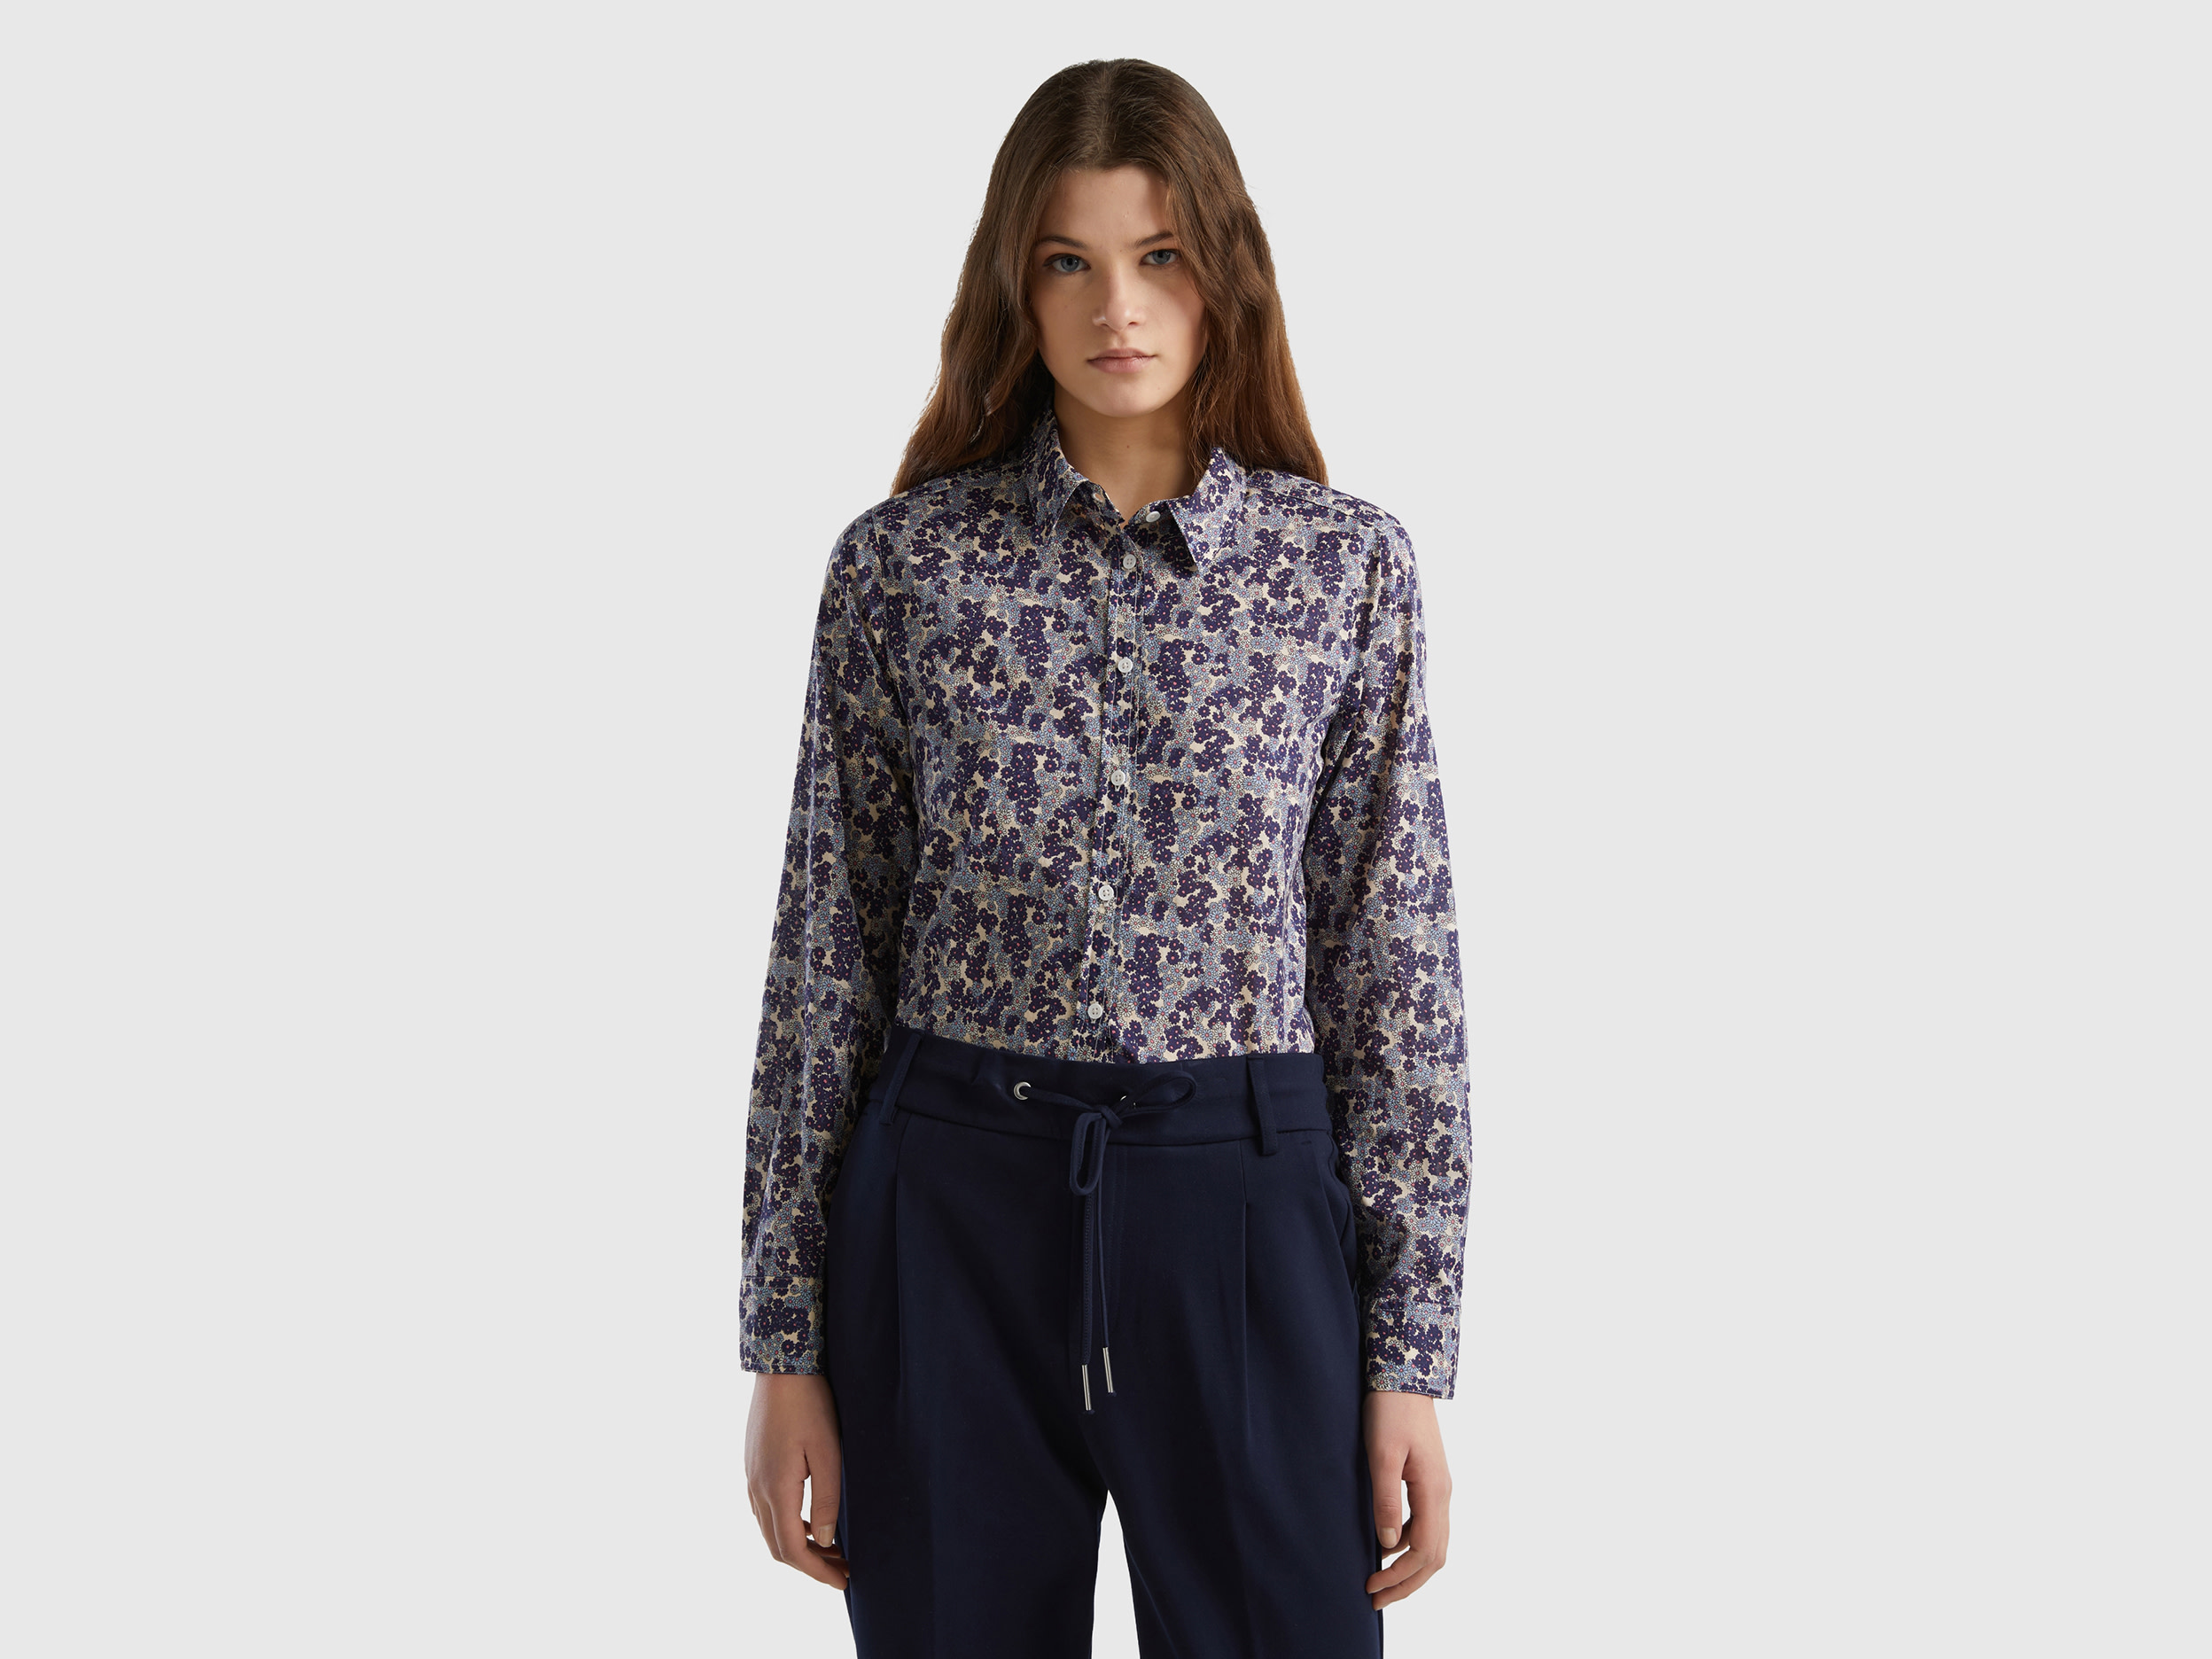 Benetton, 100% Cotton Patterned Shirt, size M, Lilac, Women